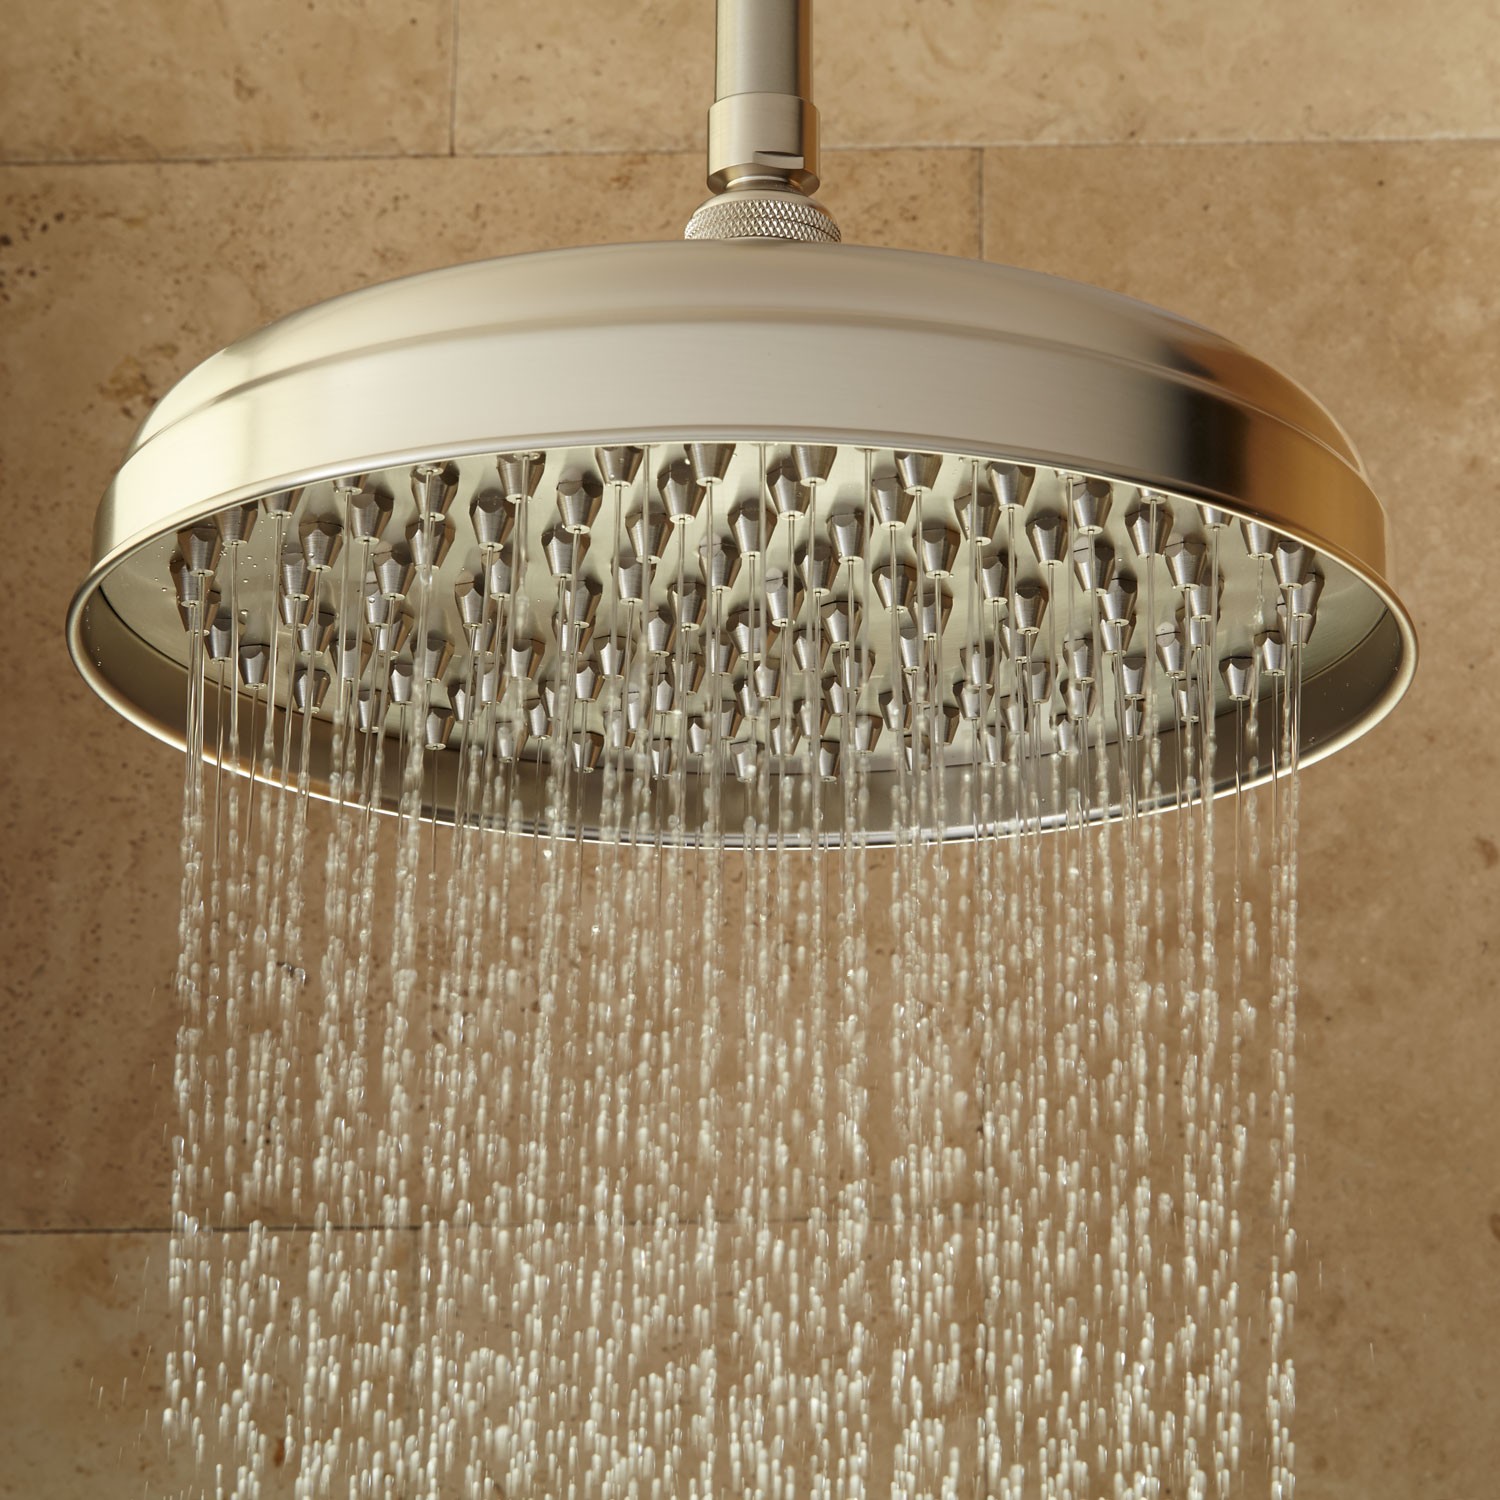 Lambert Rainfall Nozzle Shower Head - Bathroom